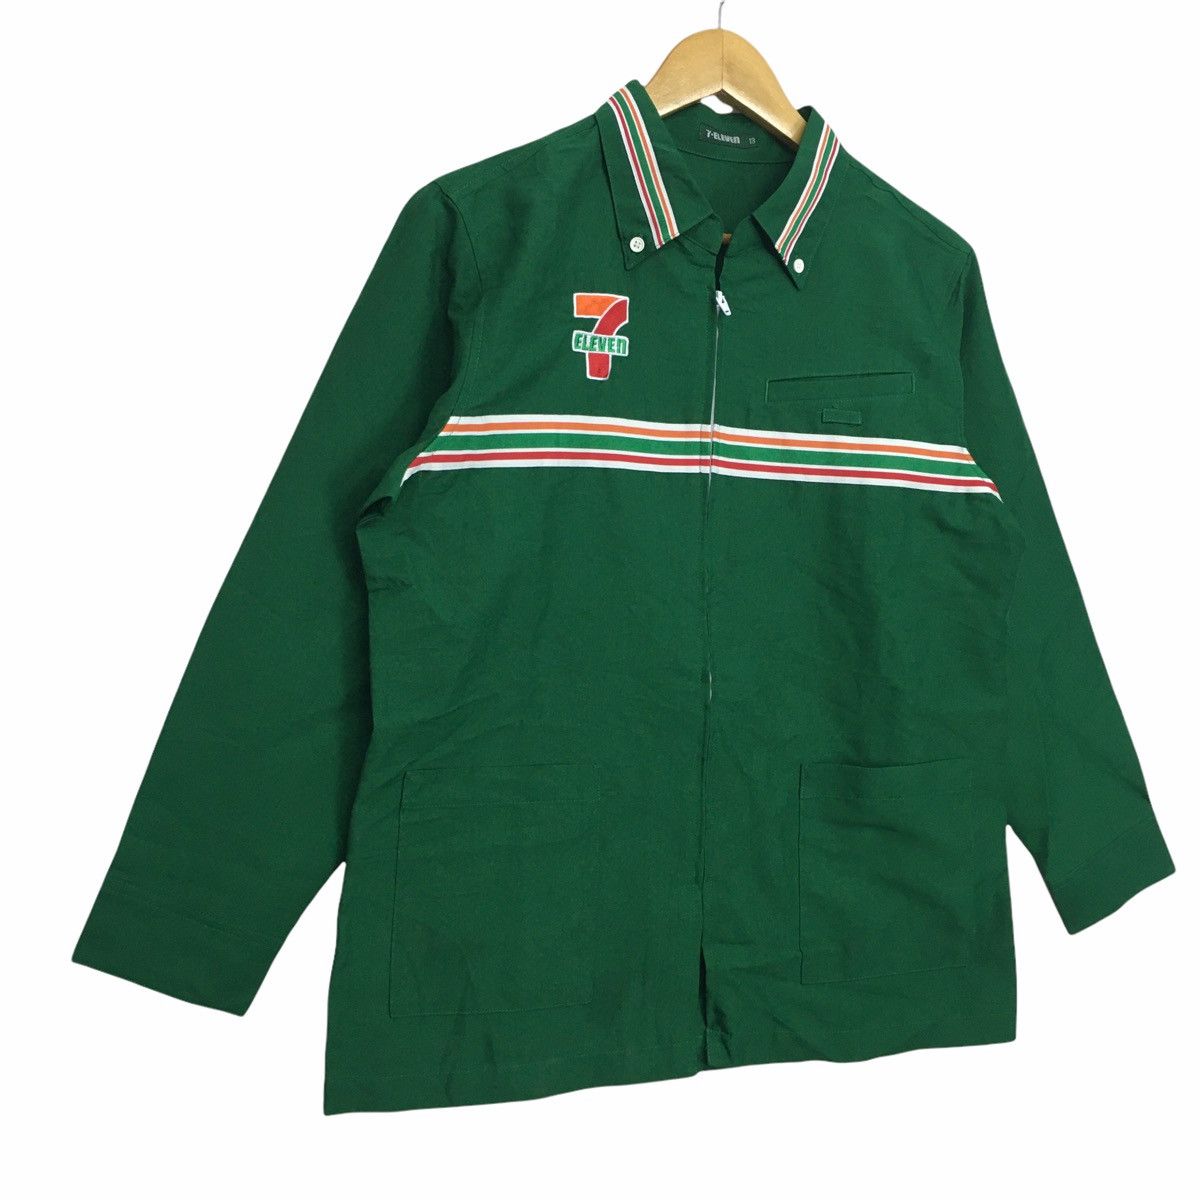 Vintage 7-ELEVEN Zip Up Shirt Spell Out 7 Eleven Worker Uniform Size US M / EU 48-50 / 2 - 3 Thumbnail